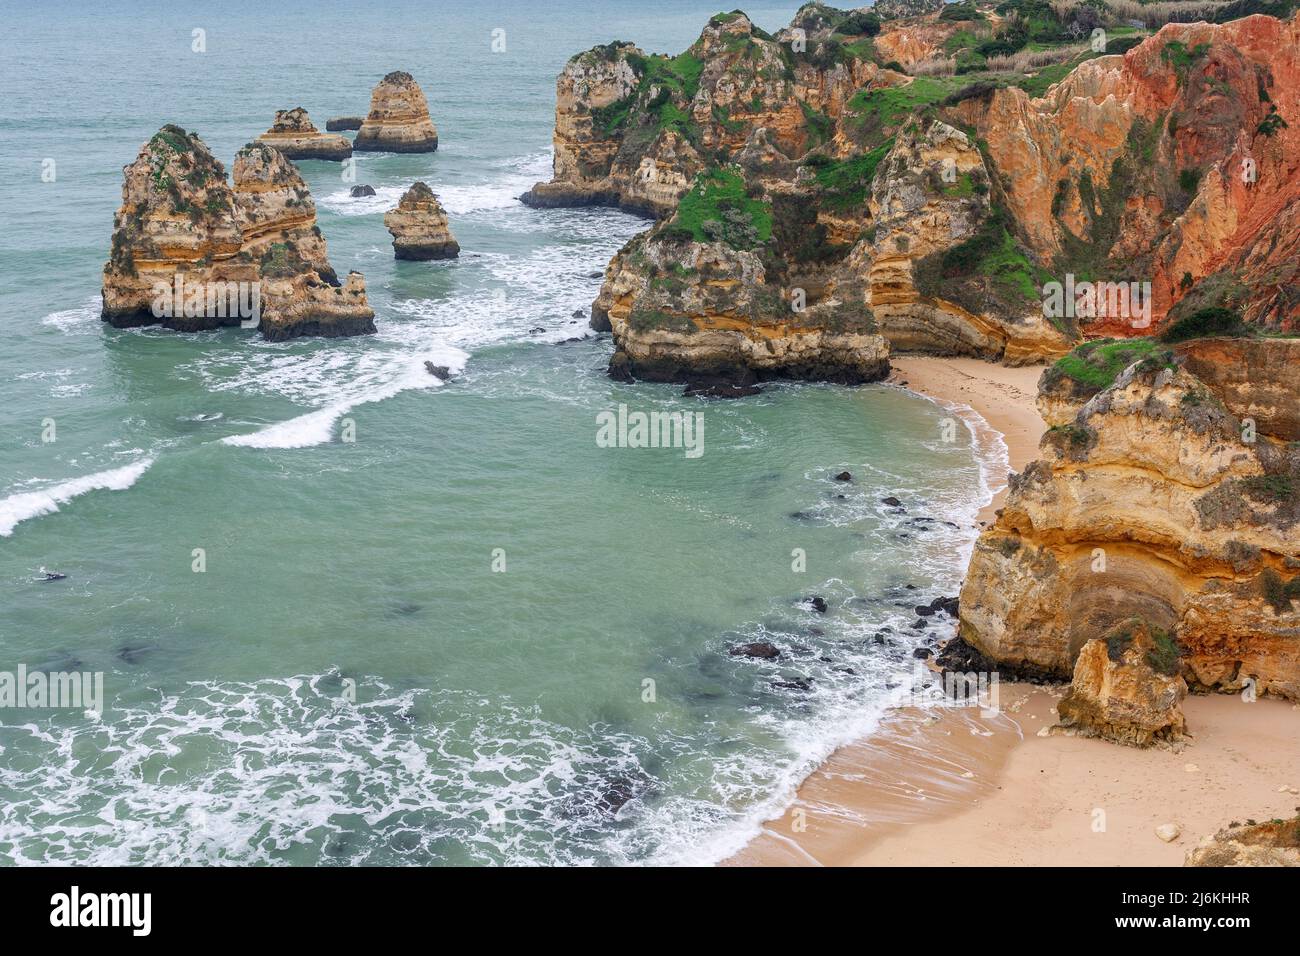 Islets and cliffs at Camilo beach, Lagos, Algarve, Portugal Stock Photo